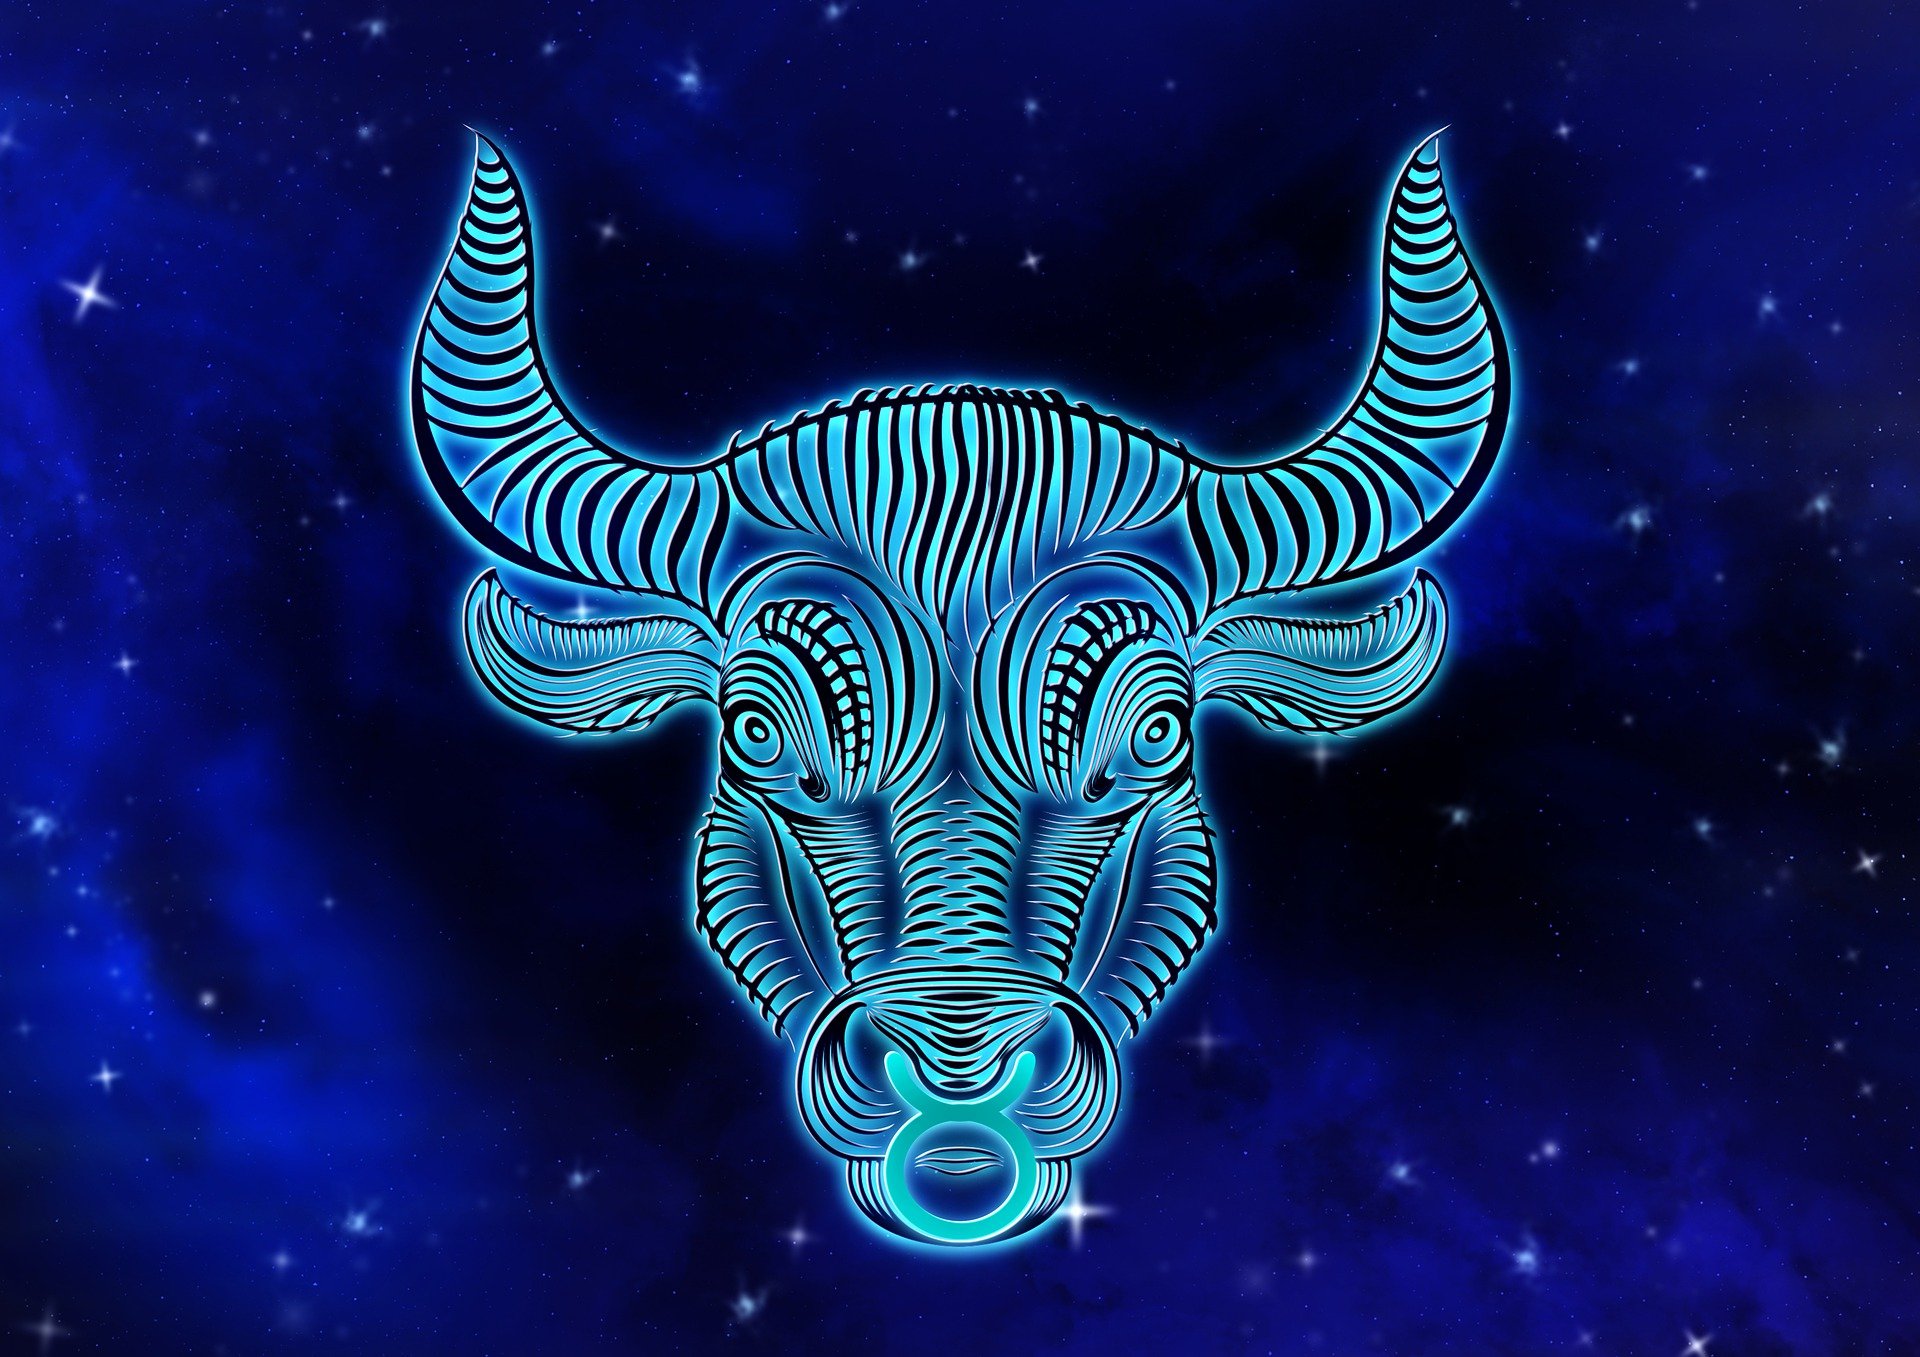 An illustration of a Taurus star sign | Source: Pixabay 